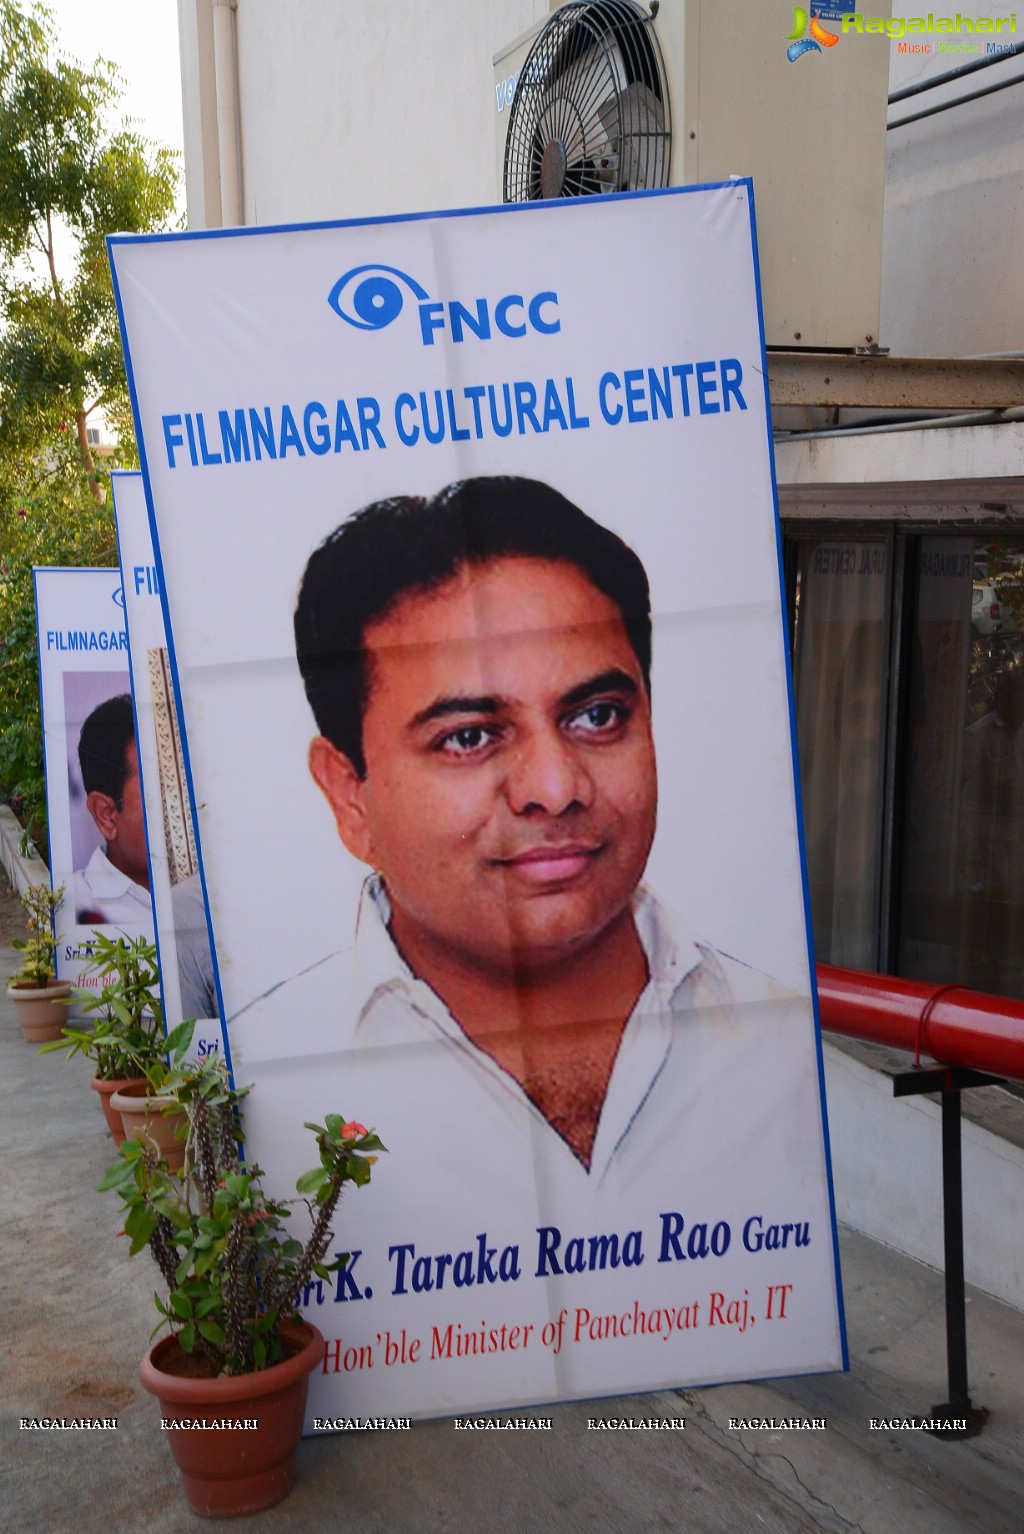 Nagarjuna, KTR Launches Shooting Center And ANR Gardens At FNCC